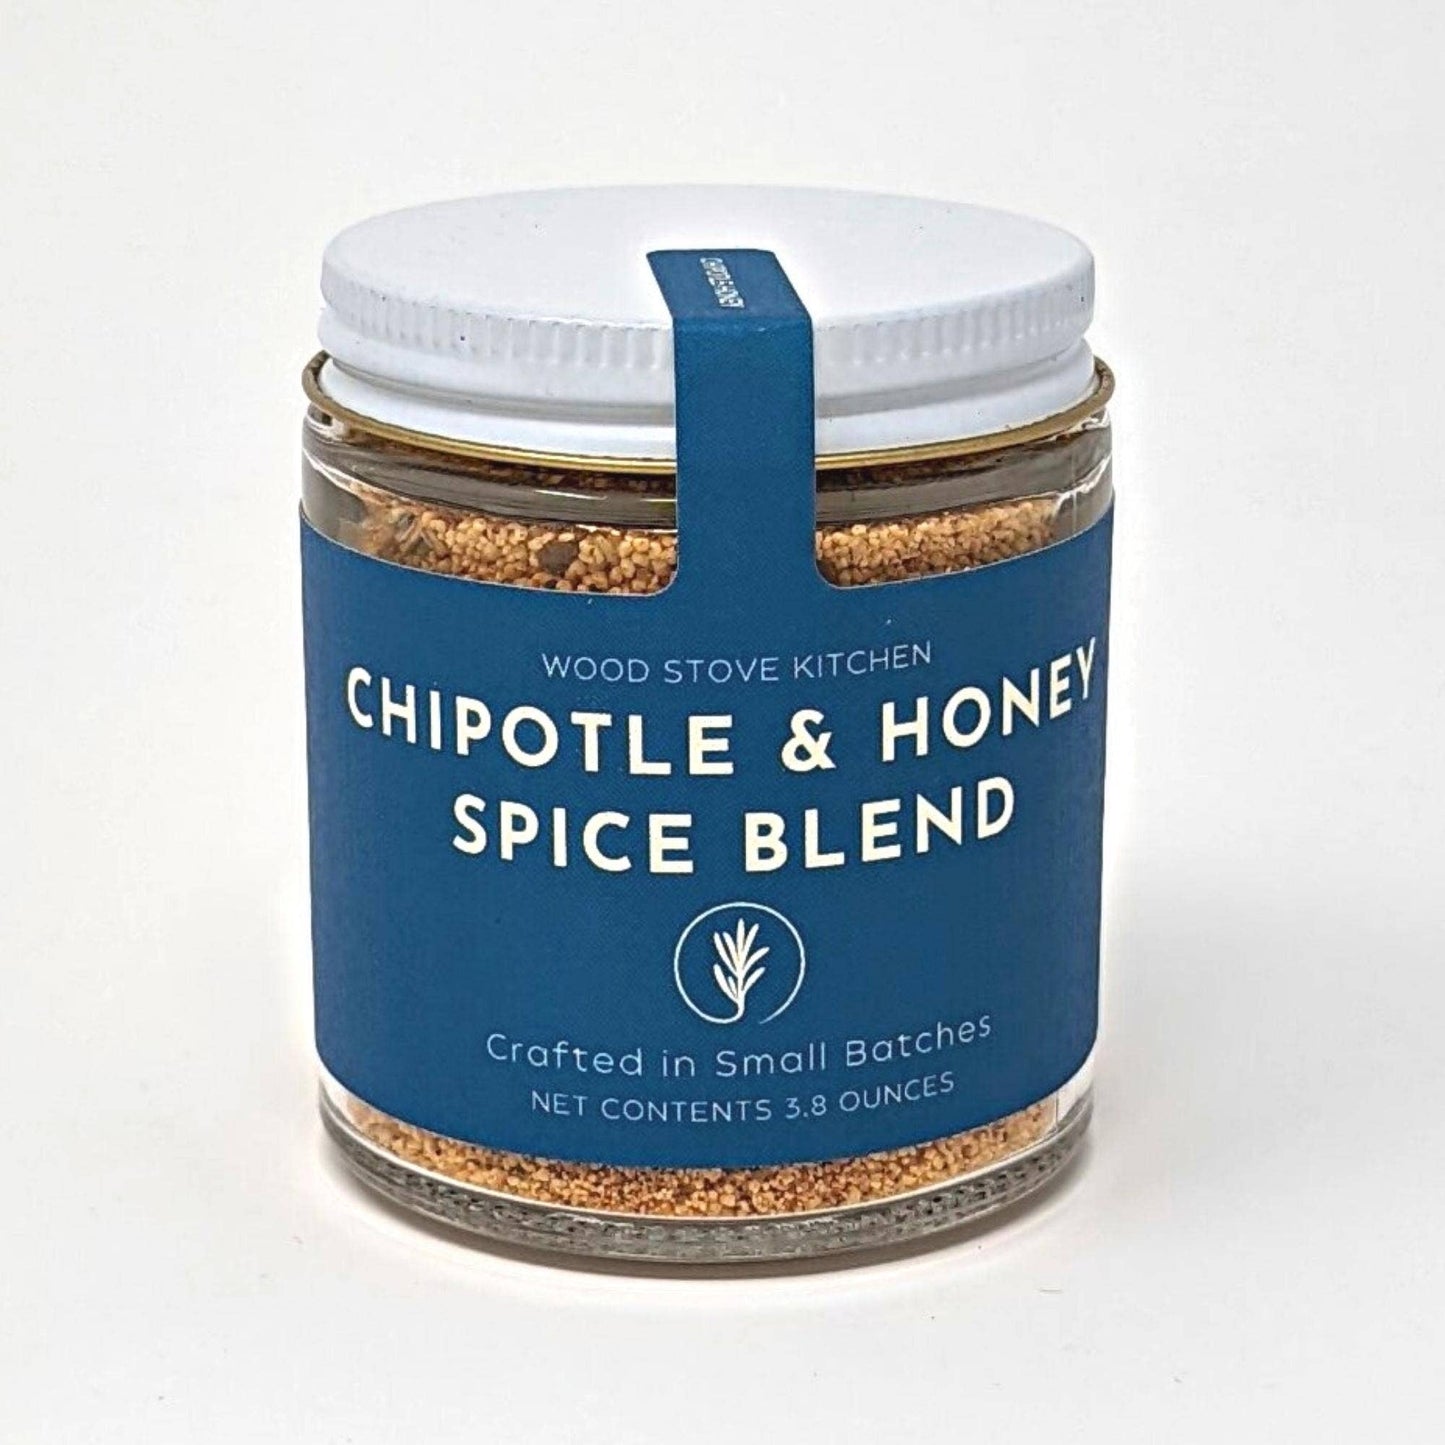 Wood Stove Kitchen - Chipotle & Honey Spice Blend